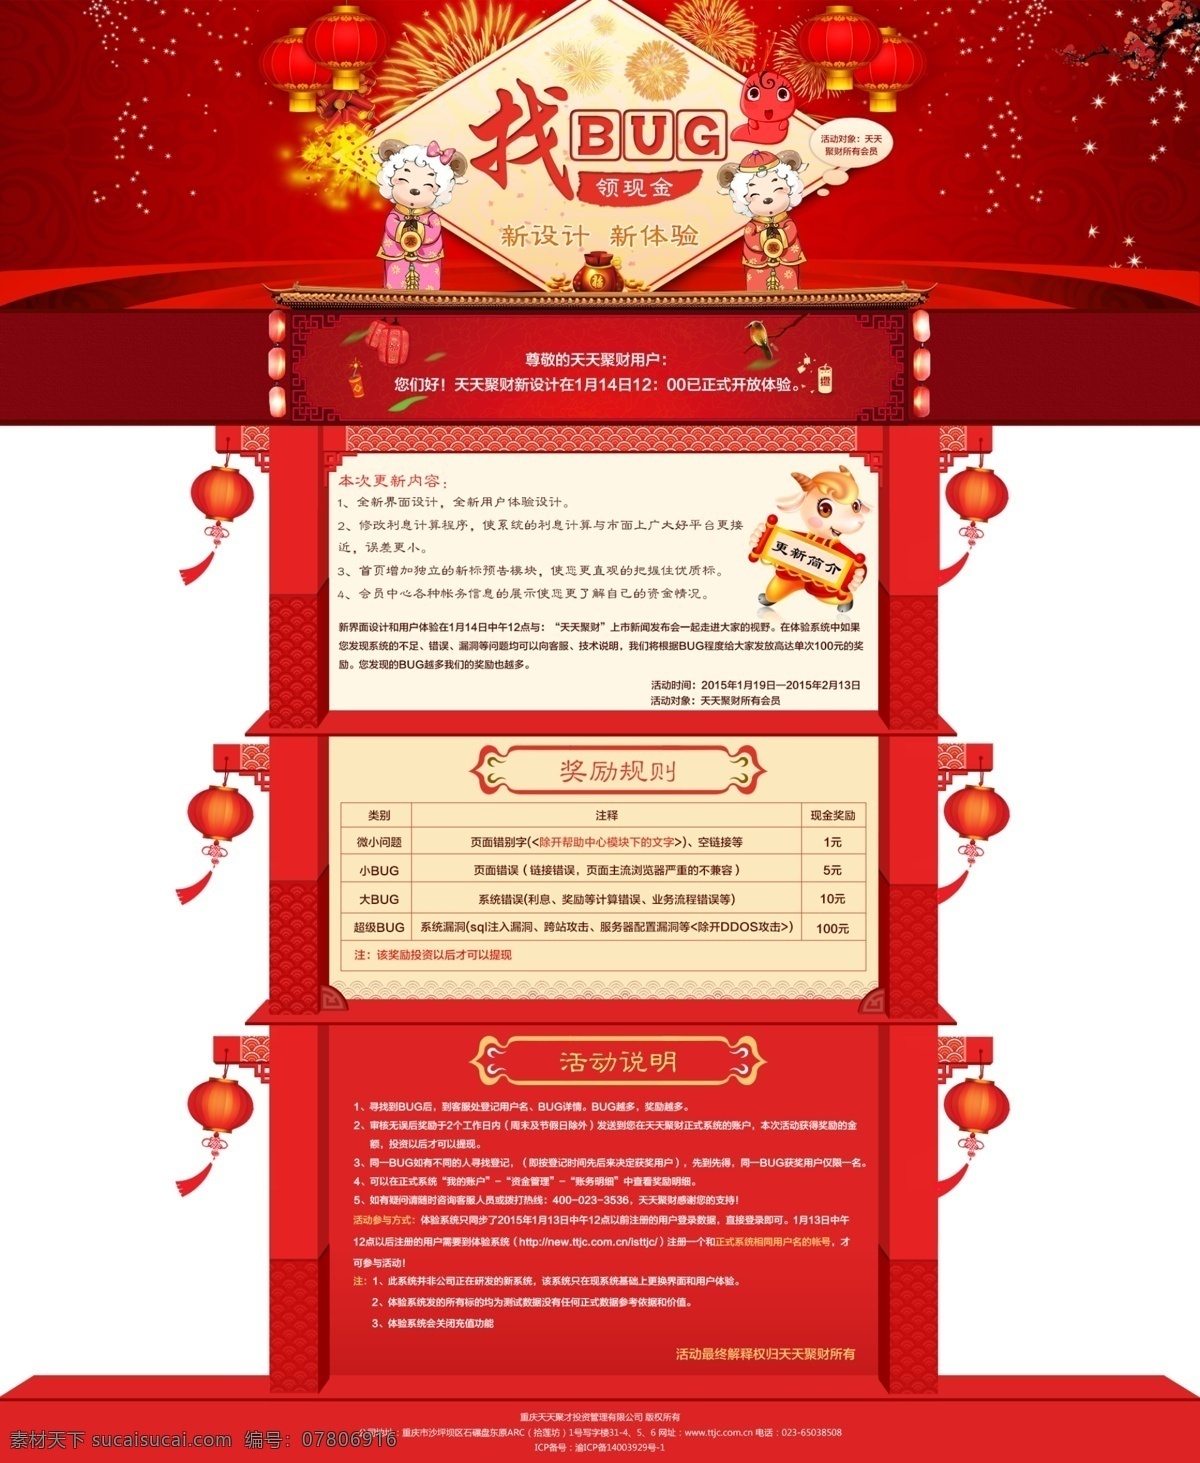 p2p 平台 系统 测试 bug 专题 红色 中文模板 专题页面 web 界面设计 网页素材 其他网页素材